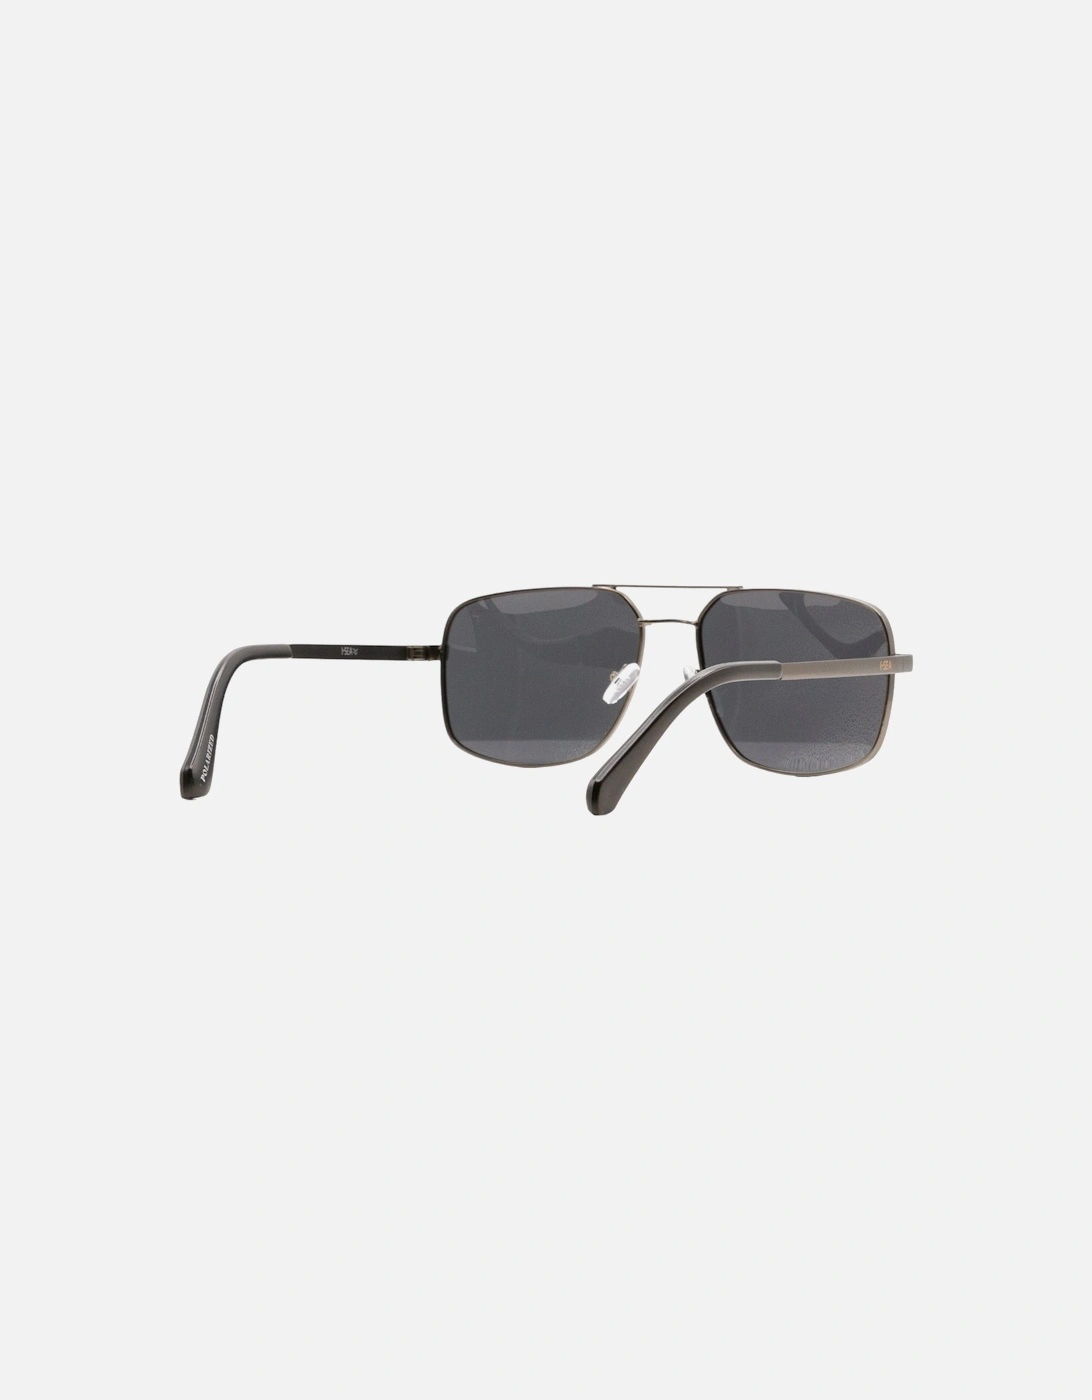 El Morro Sunglasses - Gunmetal/Smoke Polarized